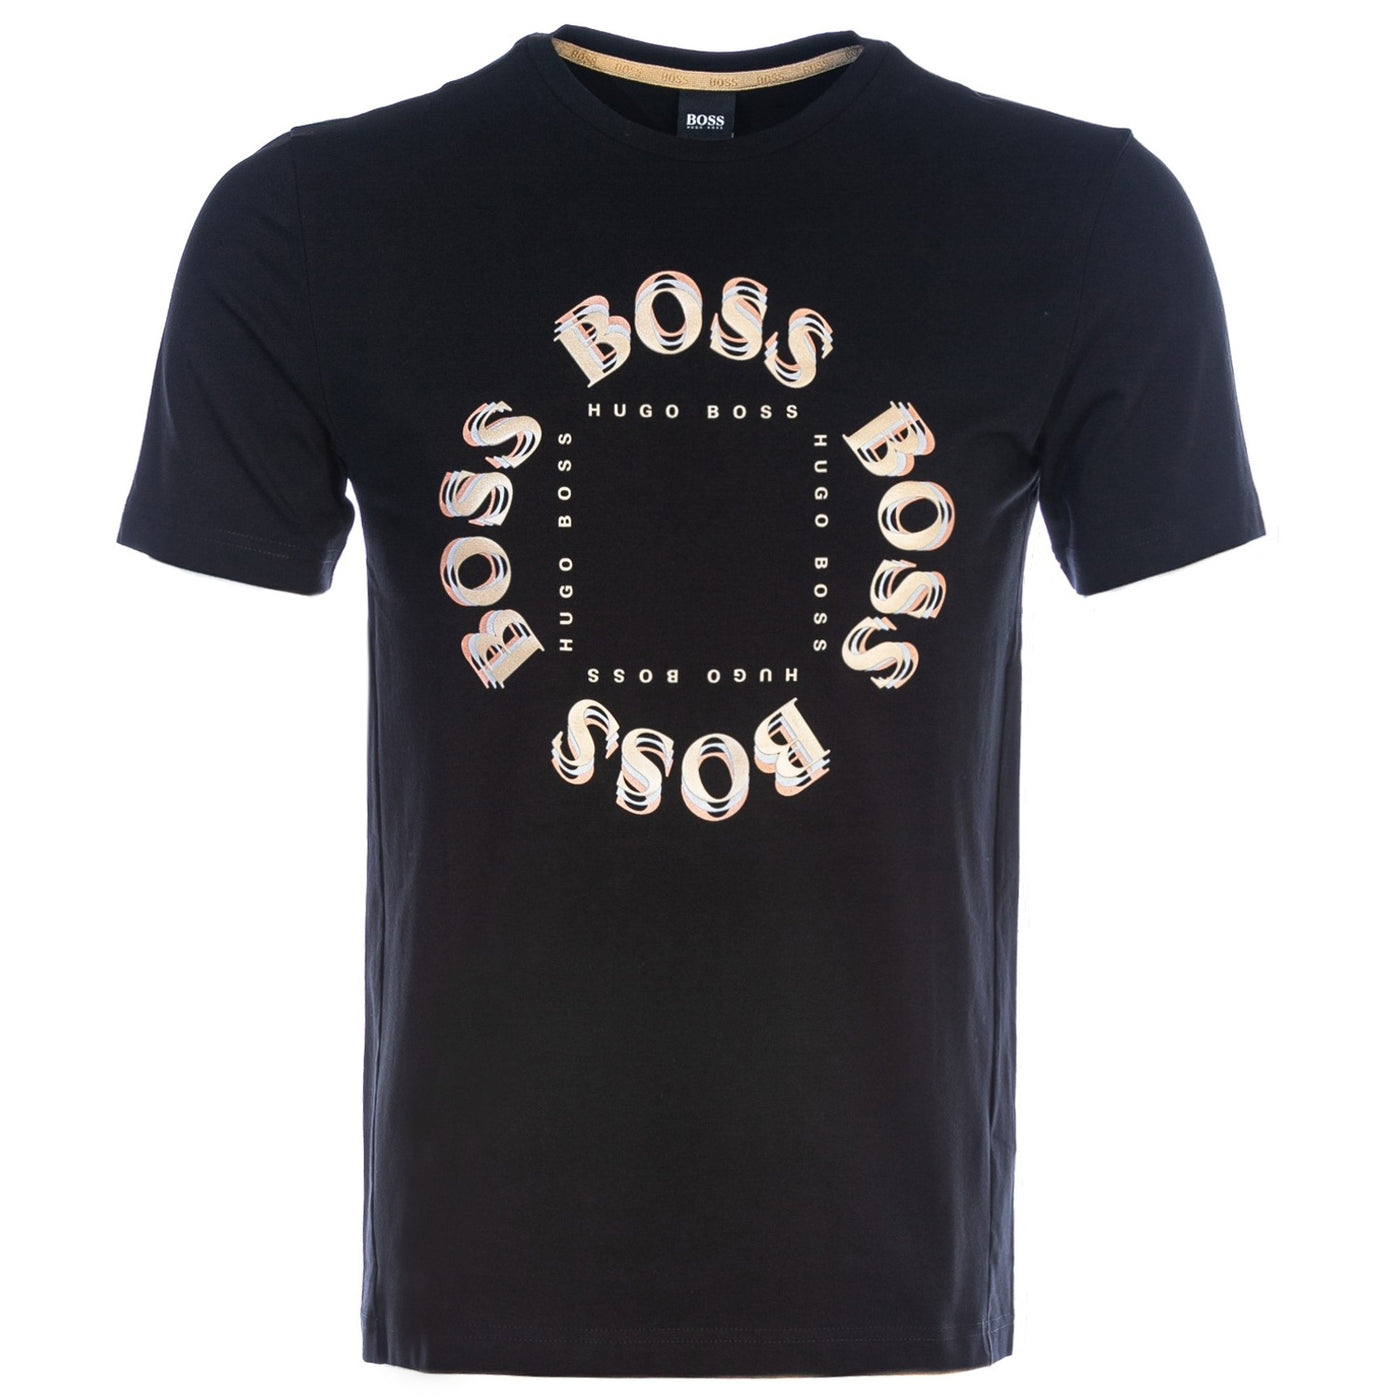 BOSS Tee 5 T Shirt in Black & Gold